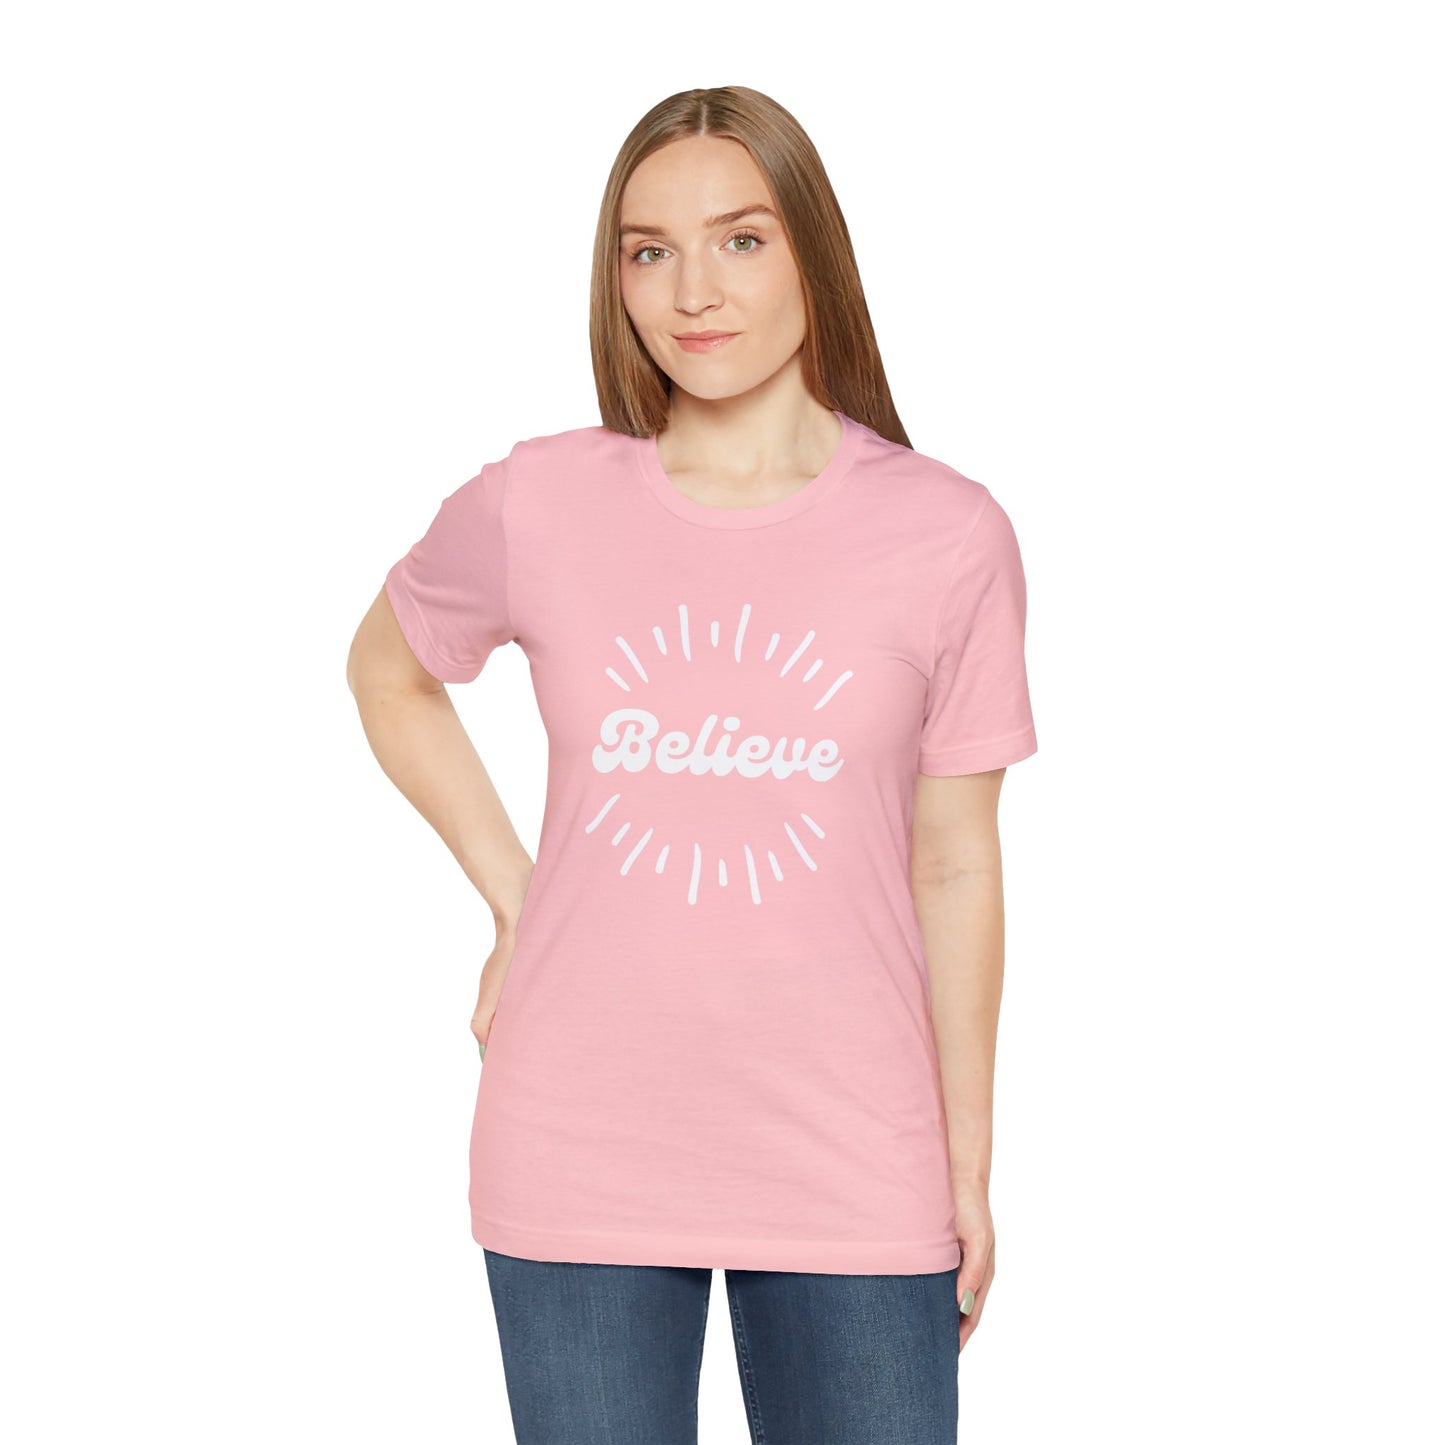 Believe T-Shirt - Friends of the Faith